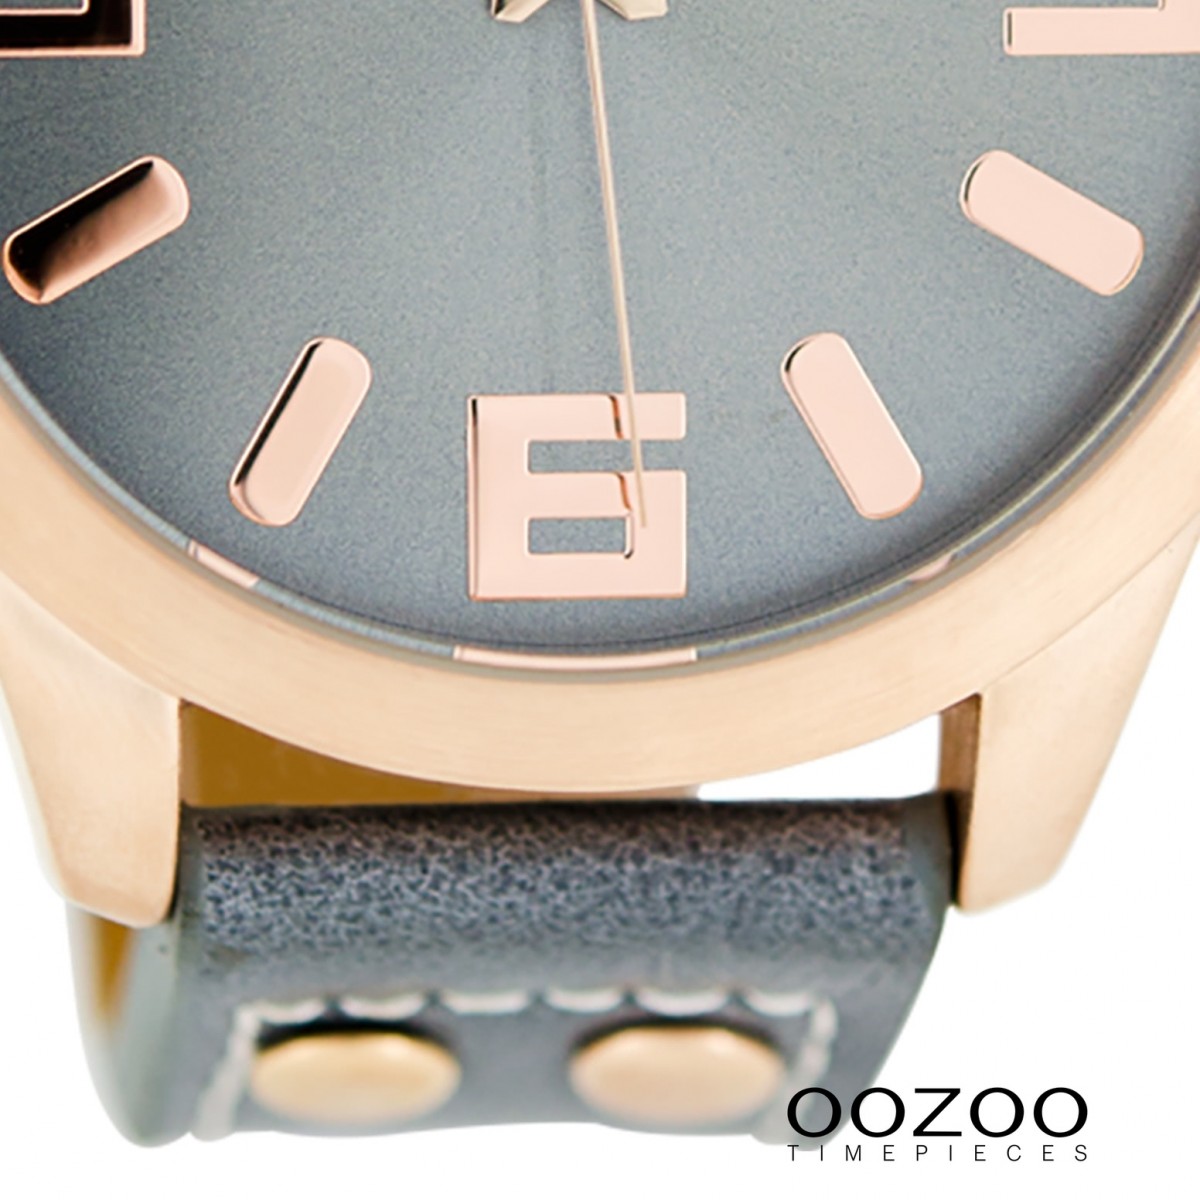 Leder-Armband UOC1154 46mm, mit Damenuhr OOZOO blaugrau/rosegold Uhr